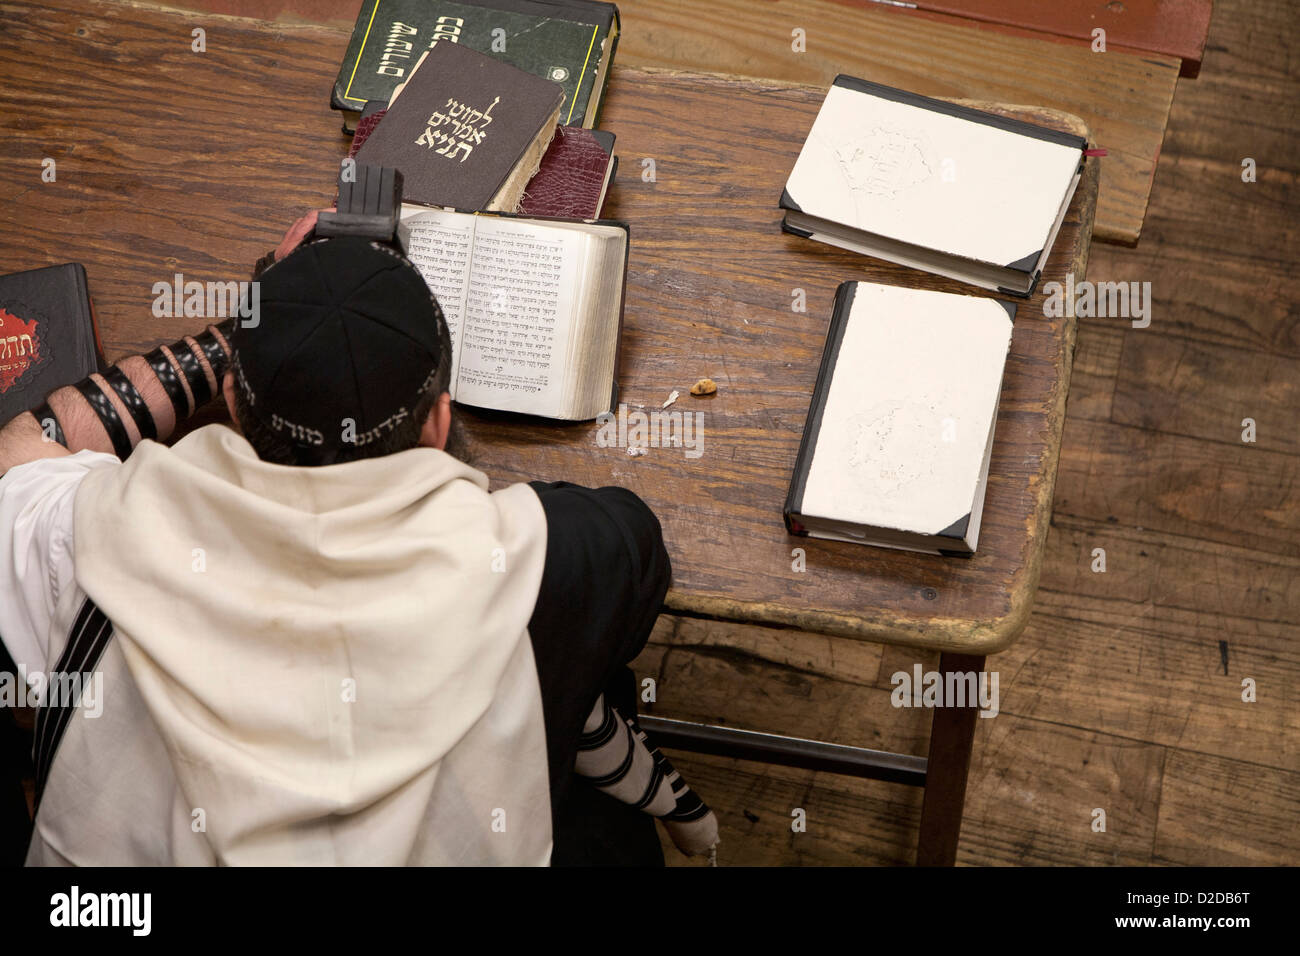 Jewish man with tefillin reading religious prayer book Stock Photo